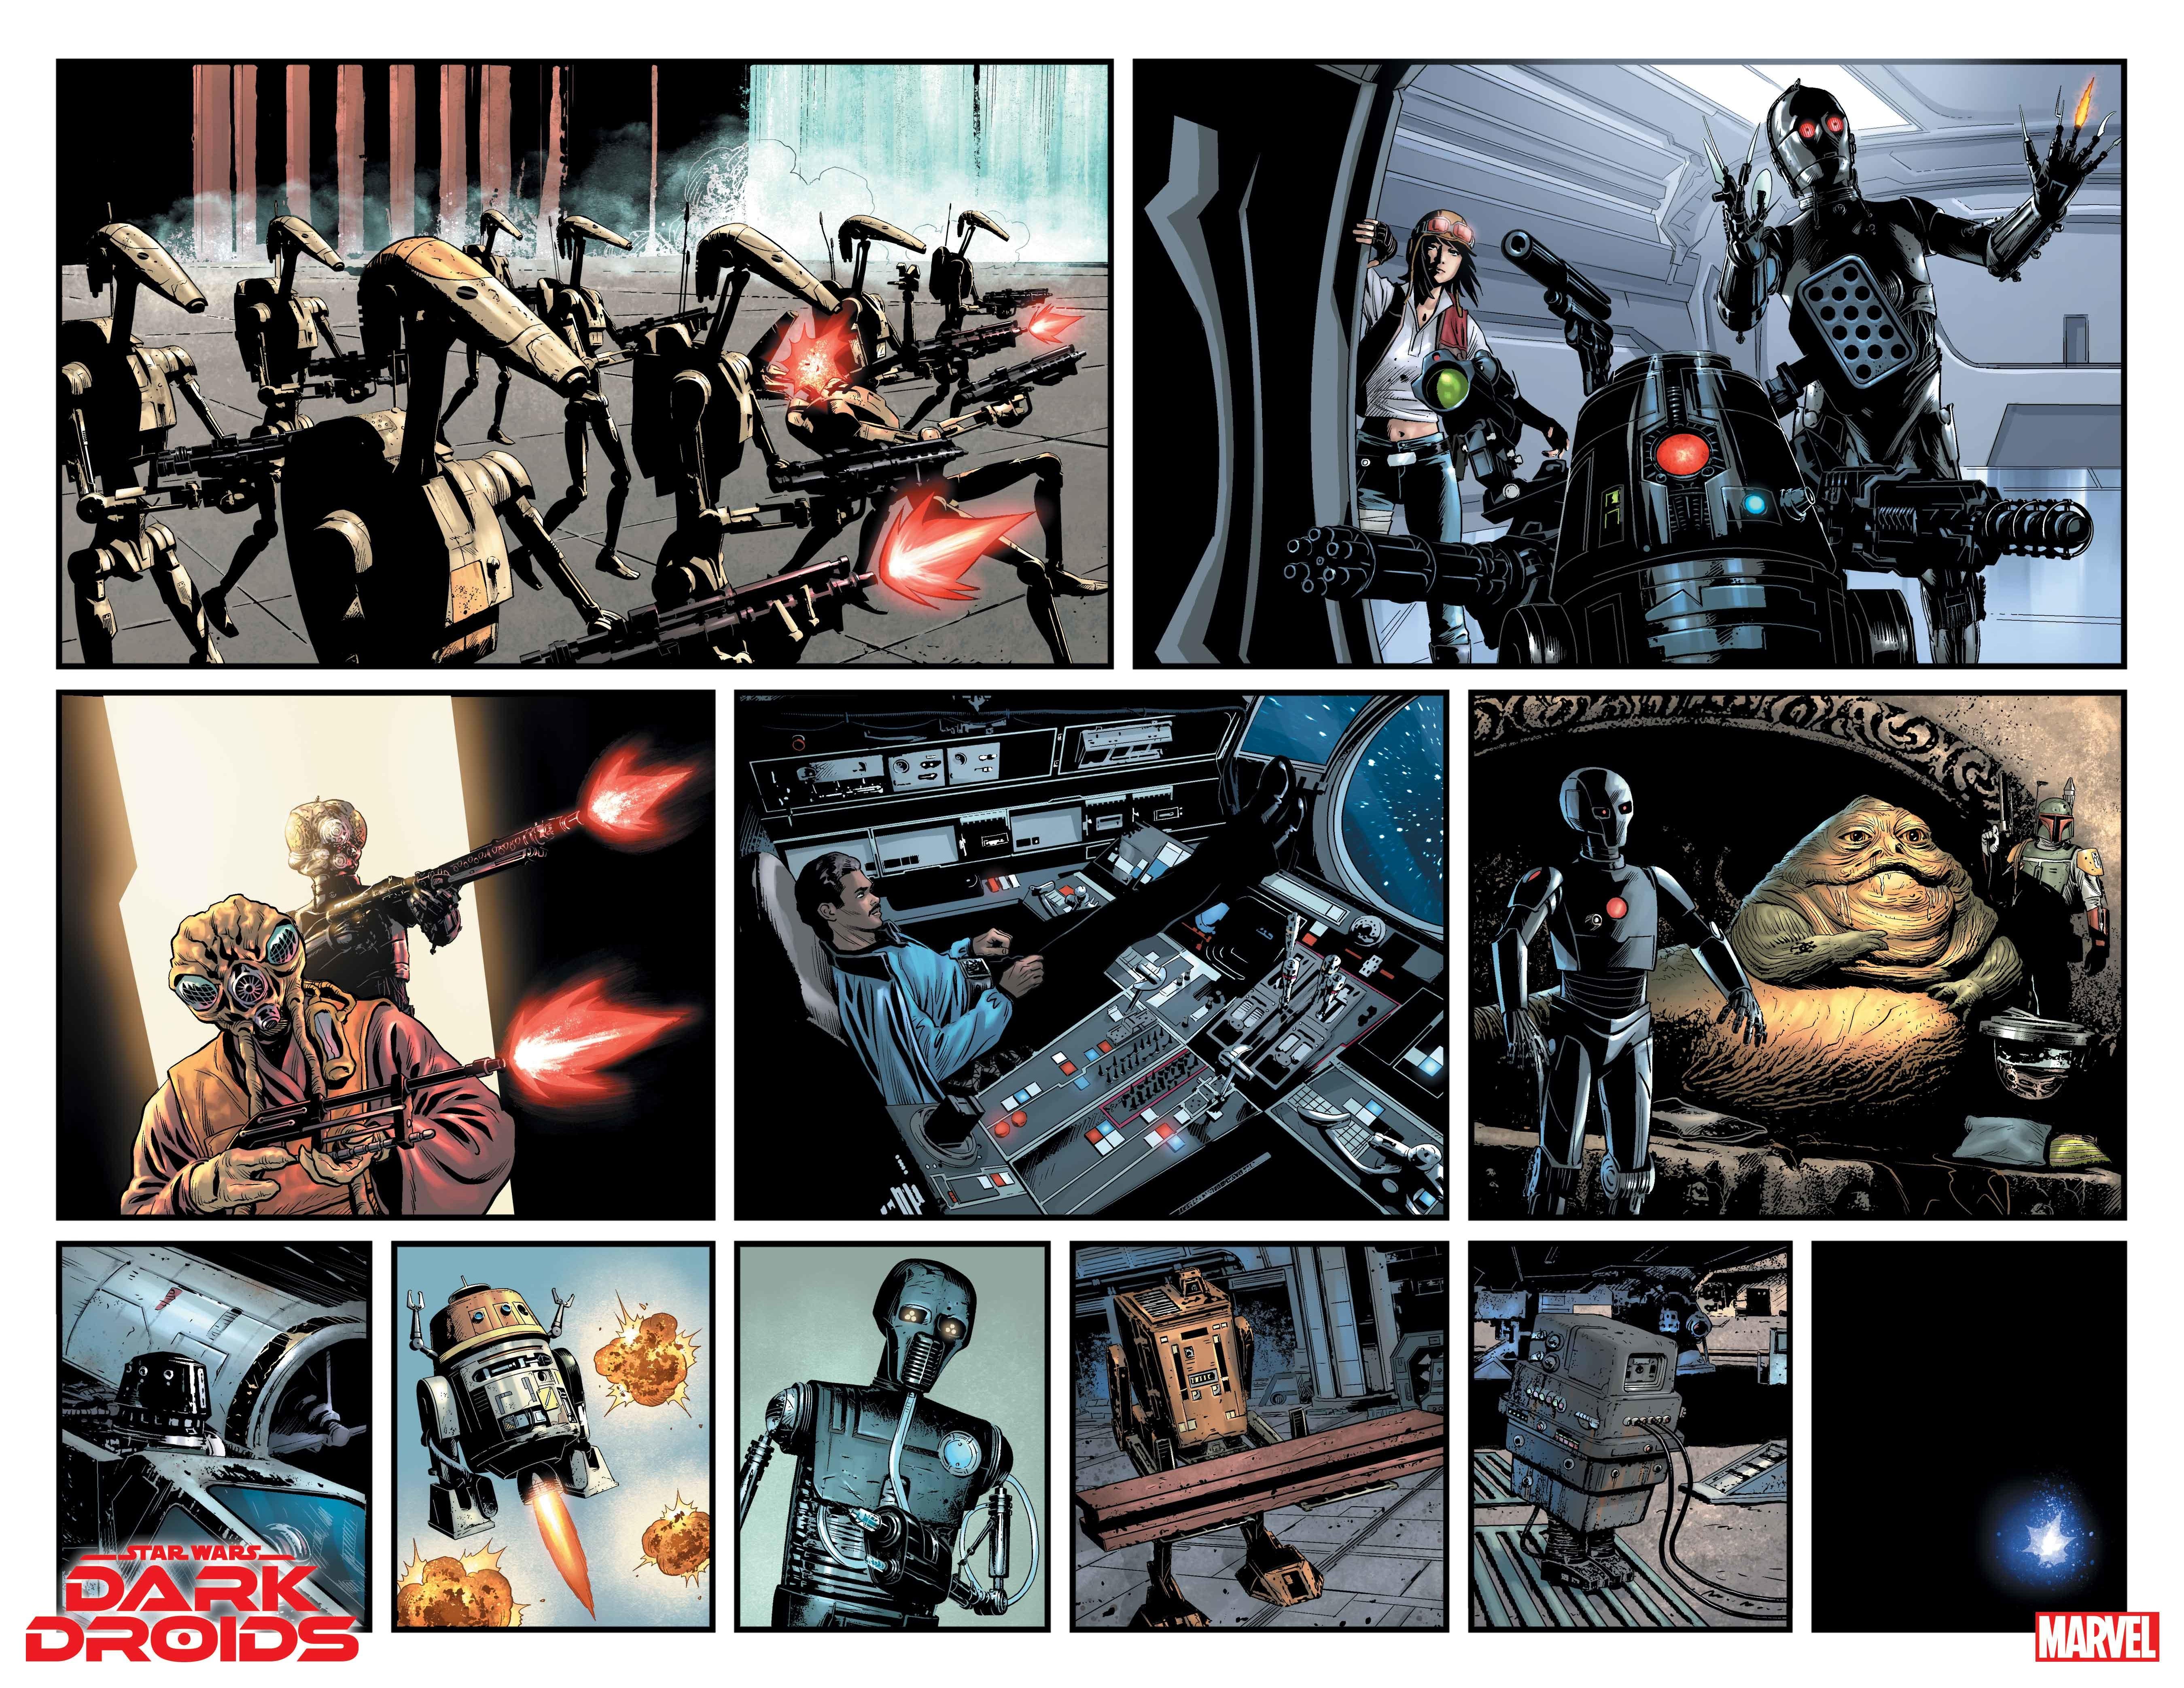 R2-D2's All-Star Team Returns in Marvel's Star Wars: Dark Droids